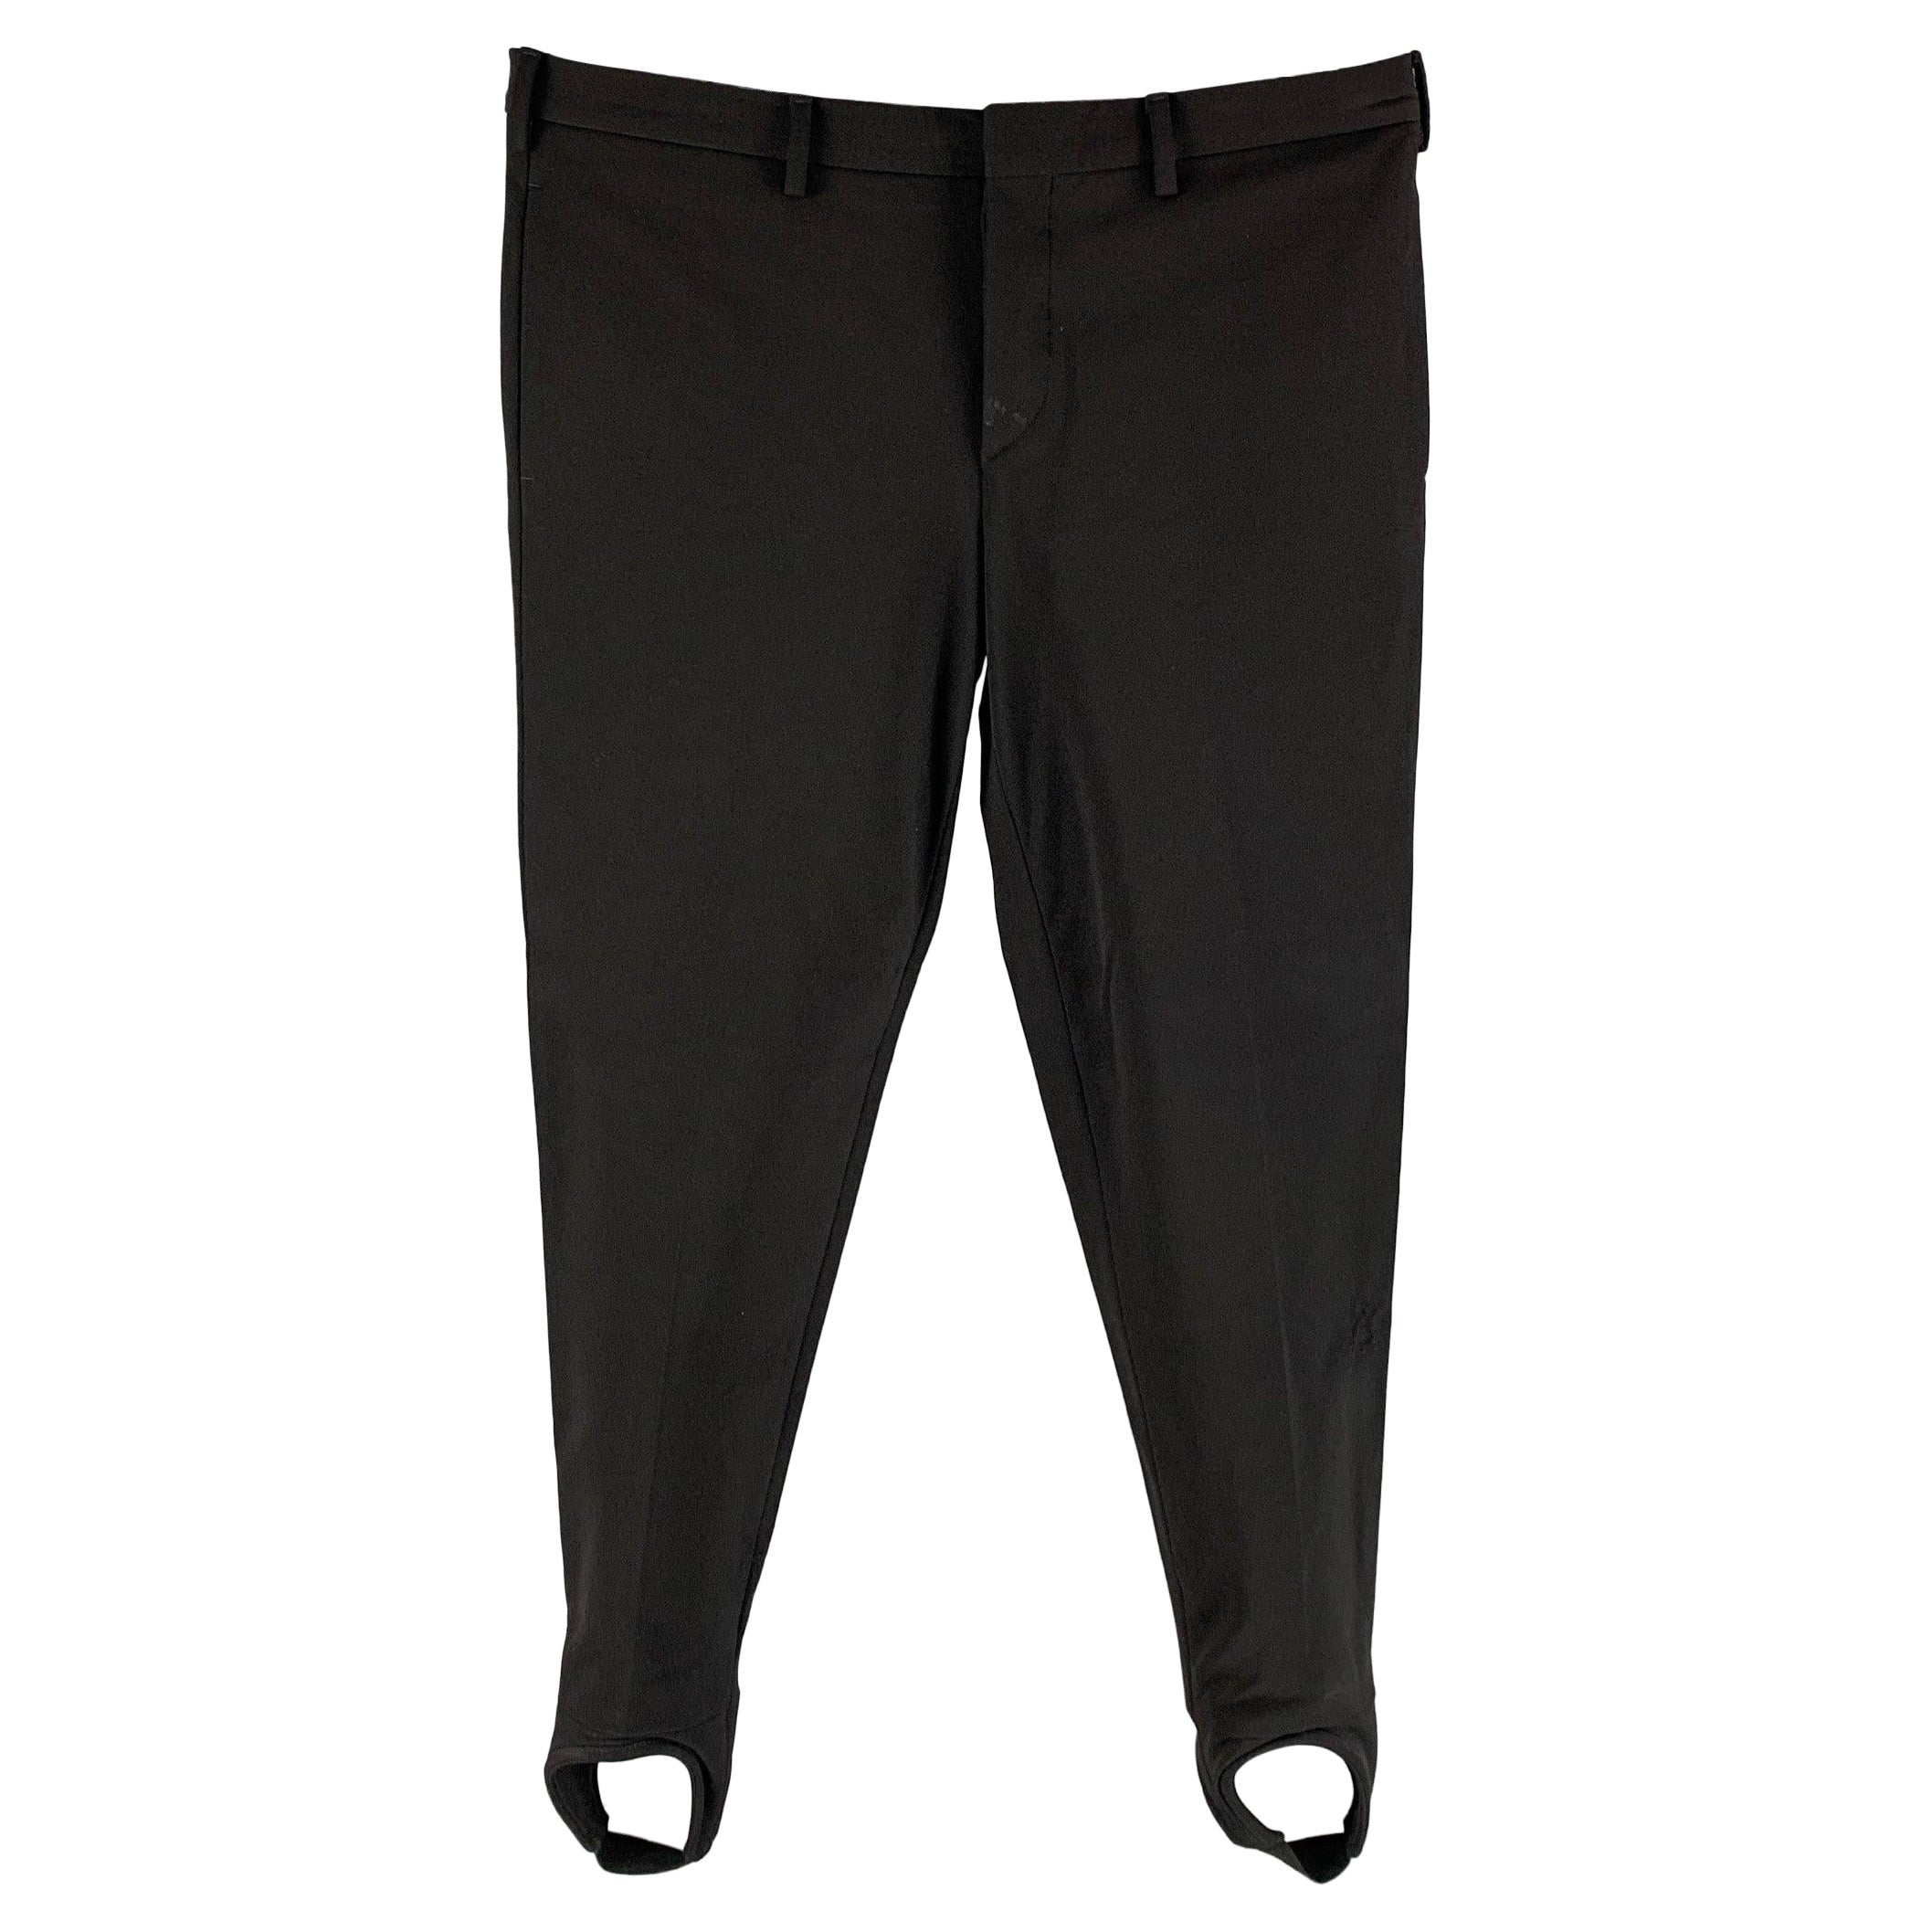 PRADA Size 36 Black Nylon Blend Jodhpurs Dress Pants For Sale